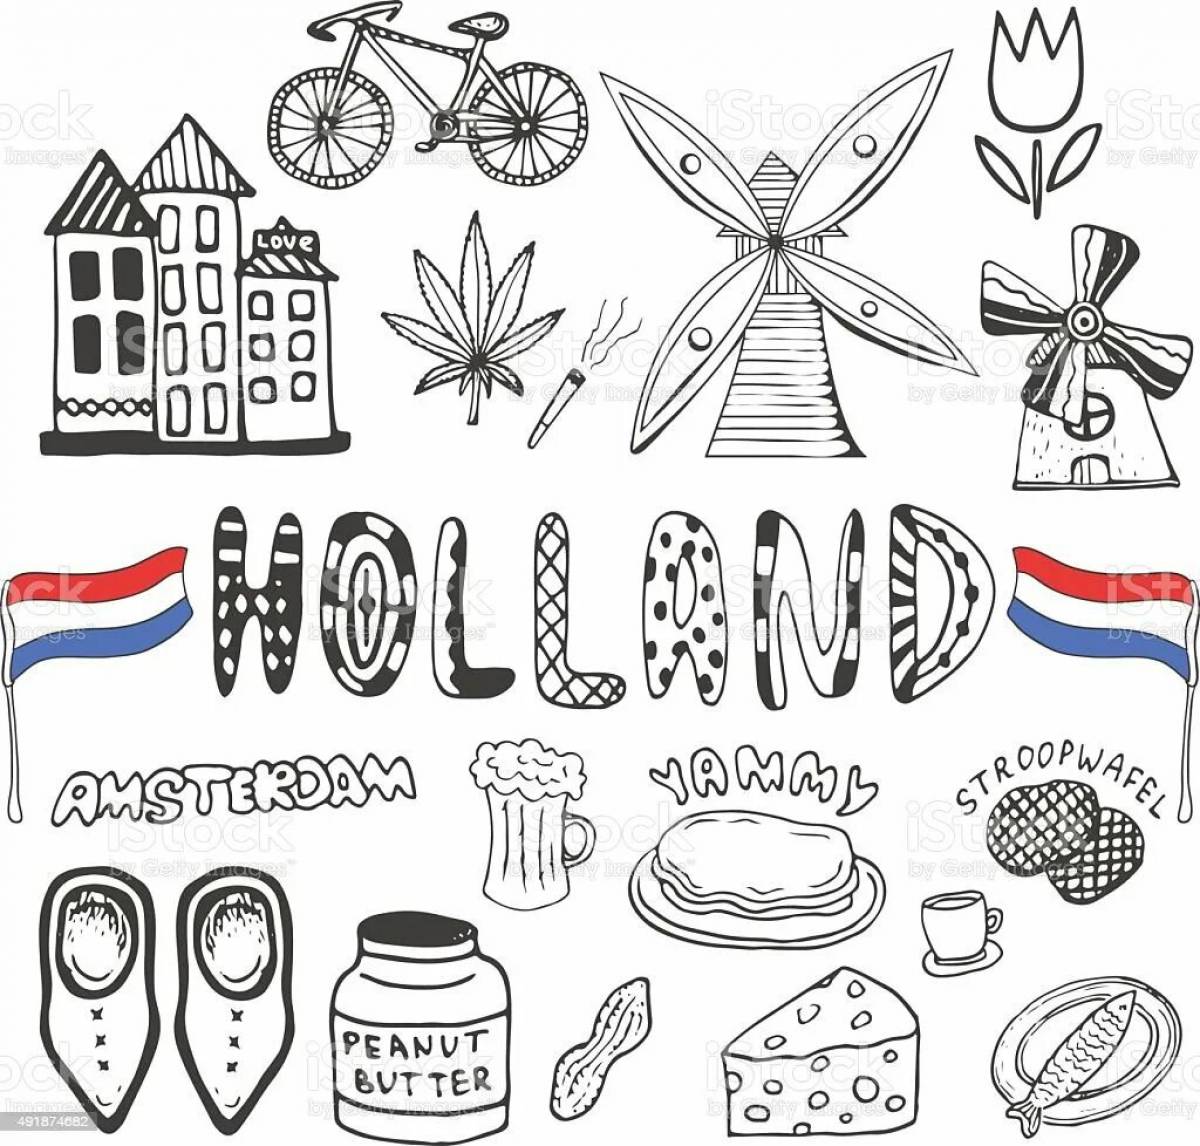 Holland#3